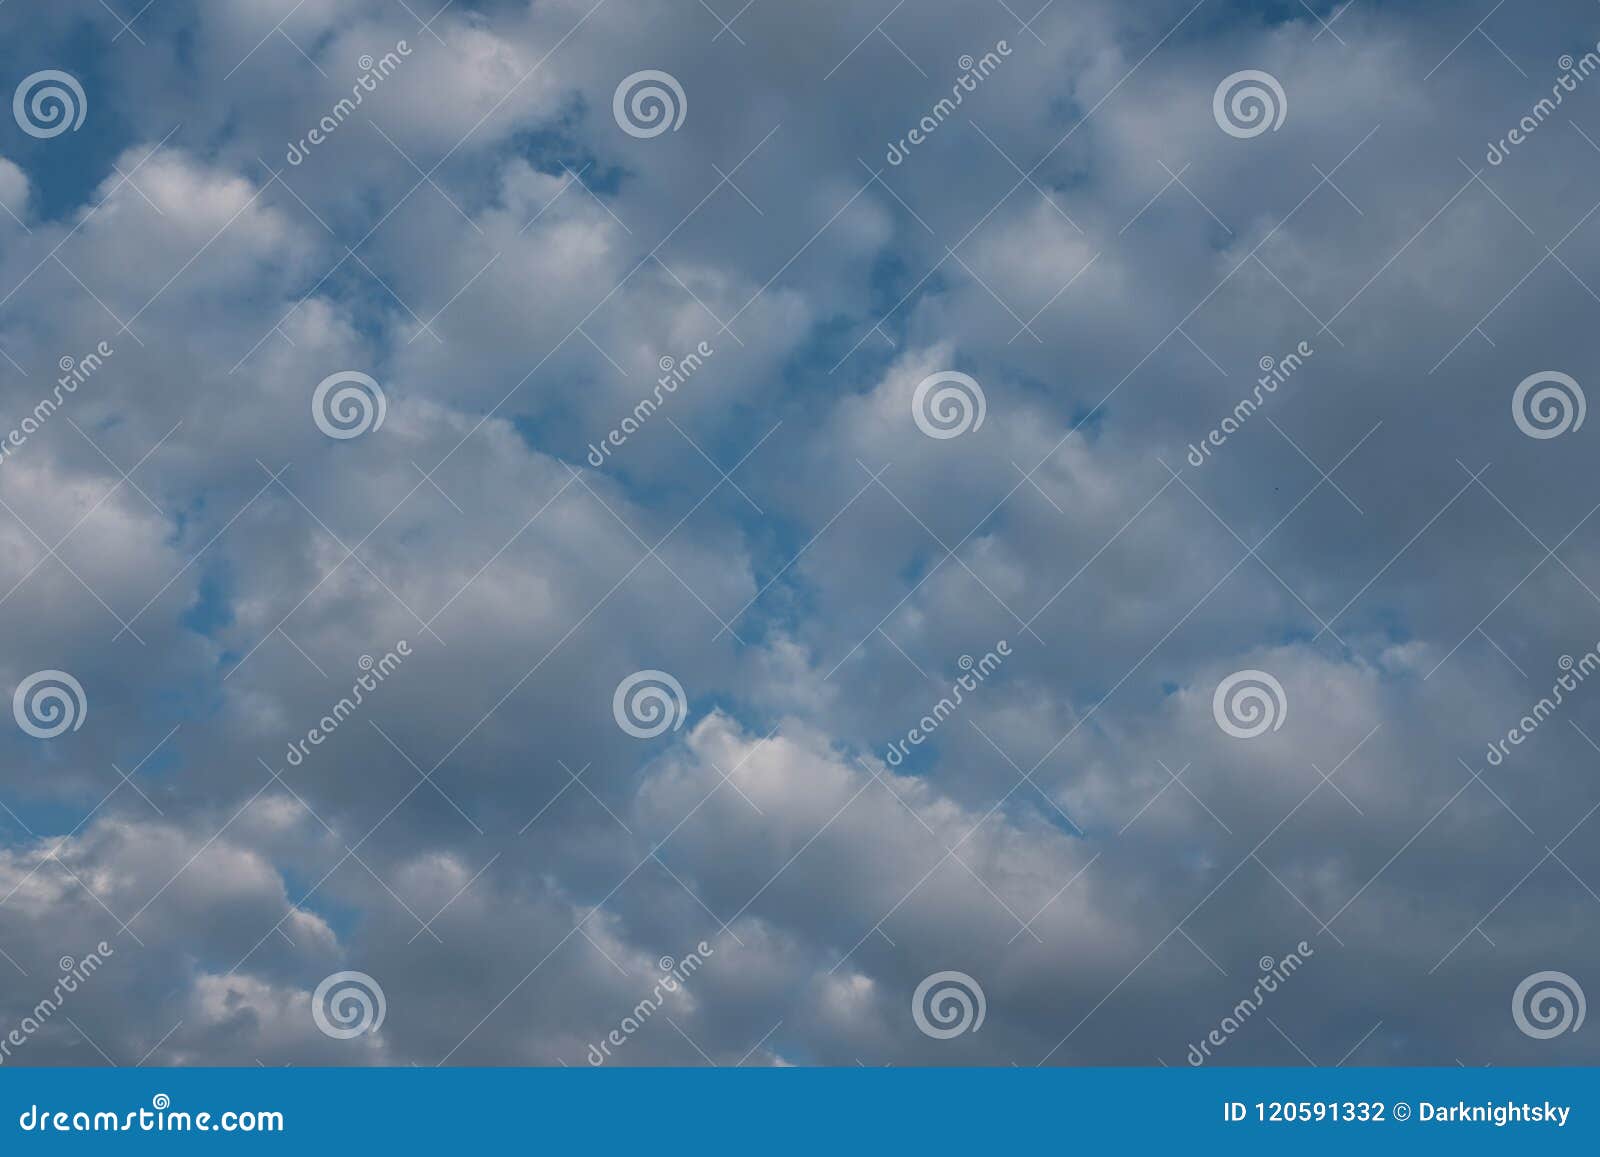 beautiful cloudy blue magenta sky